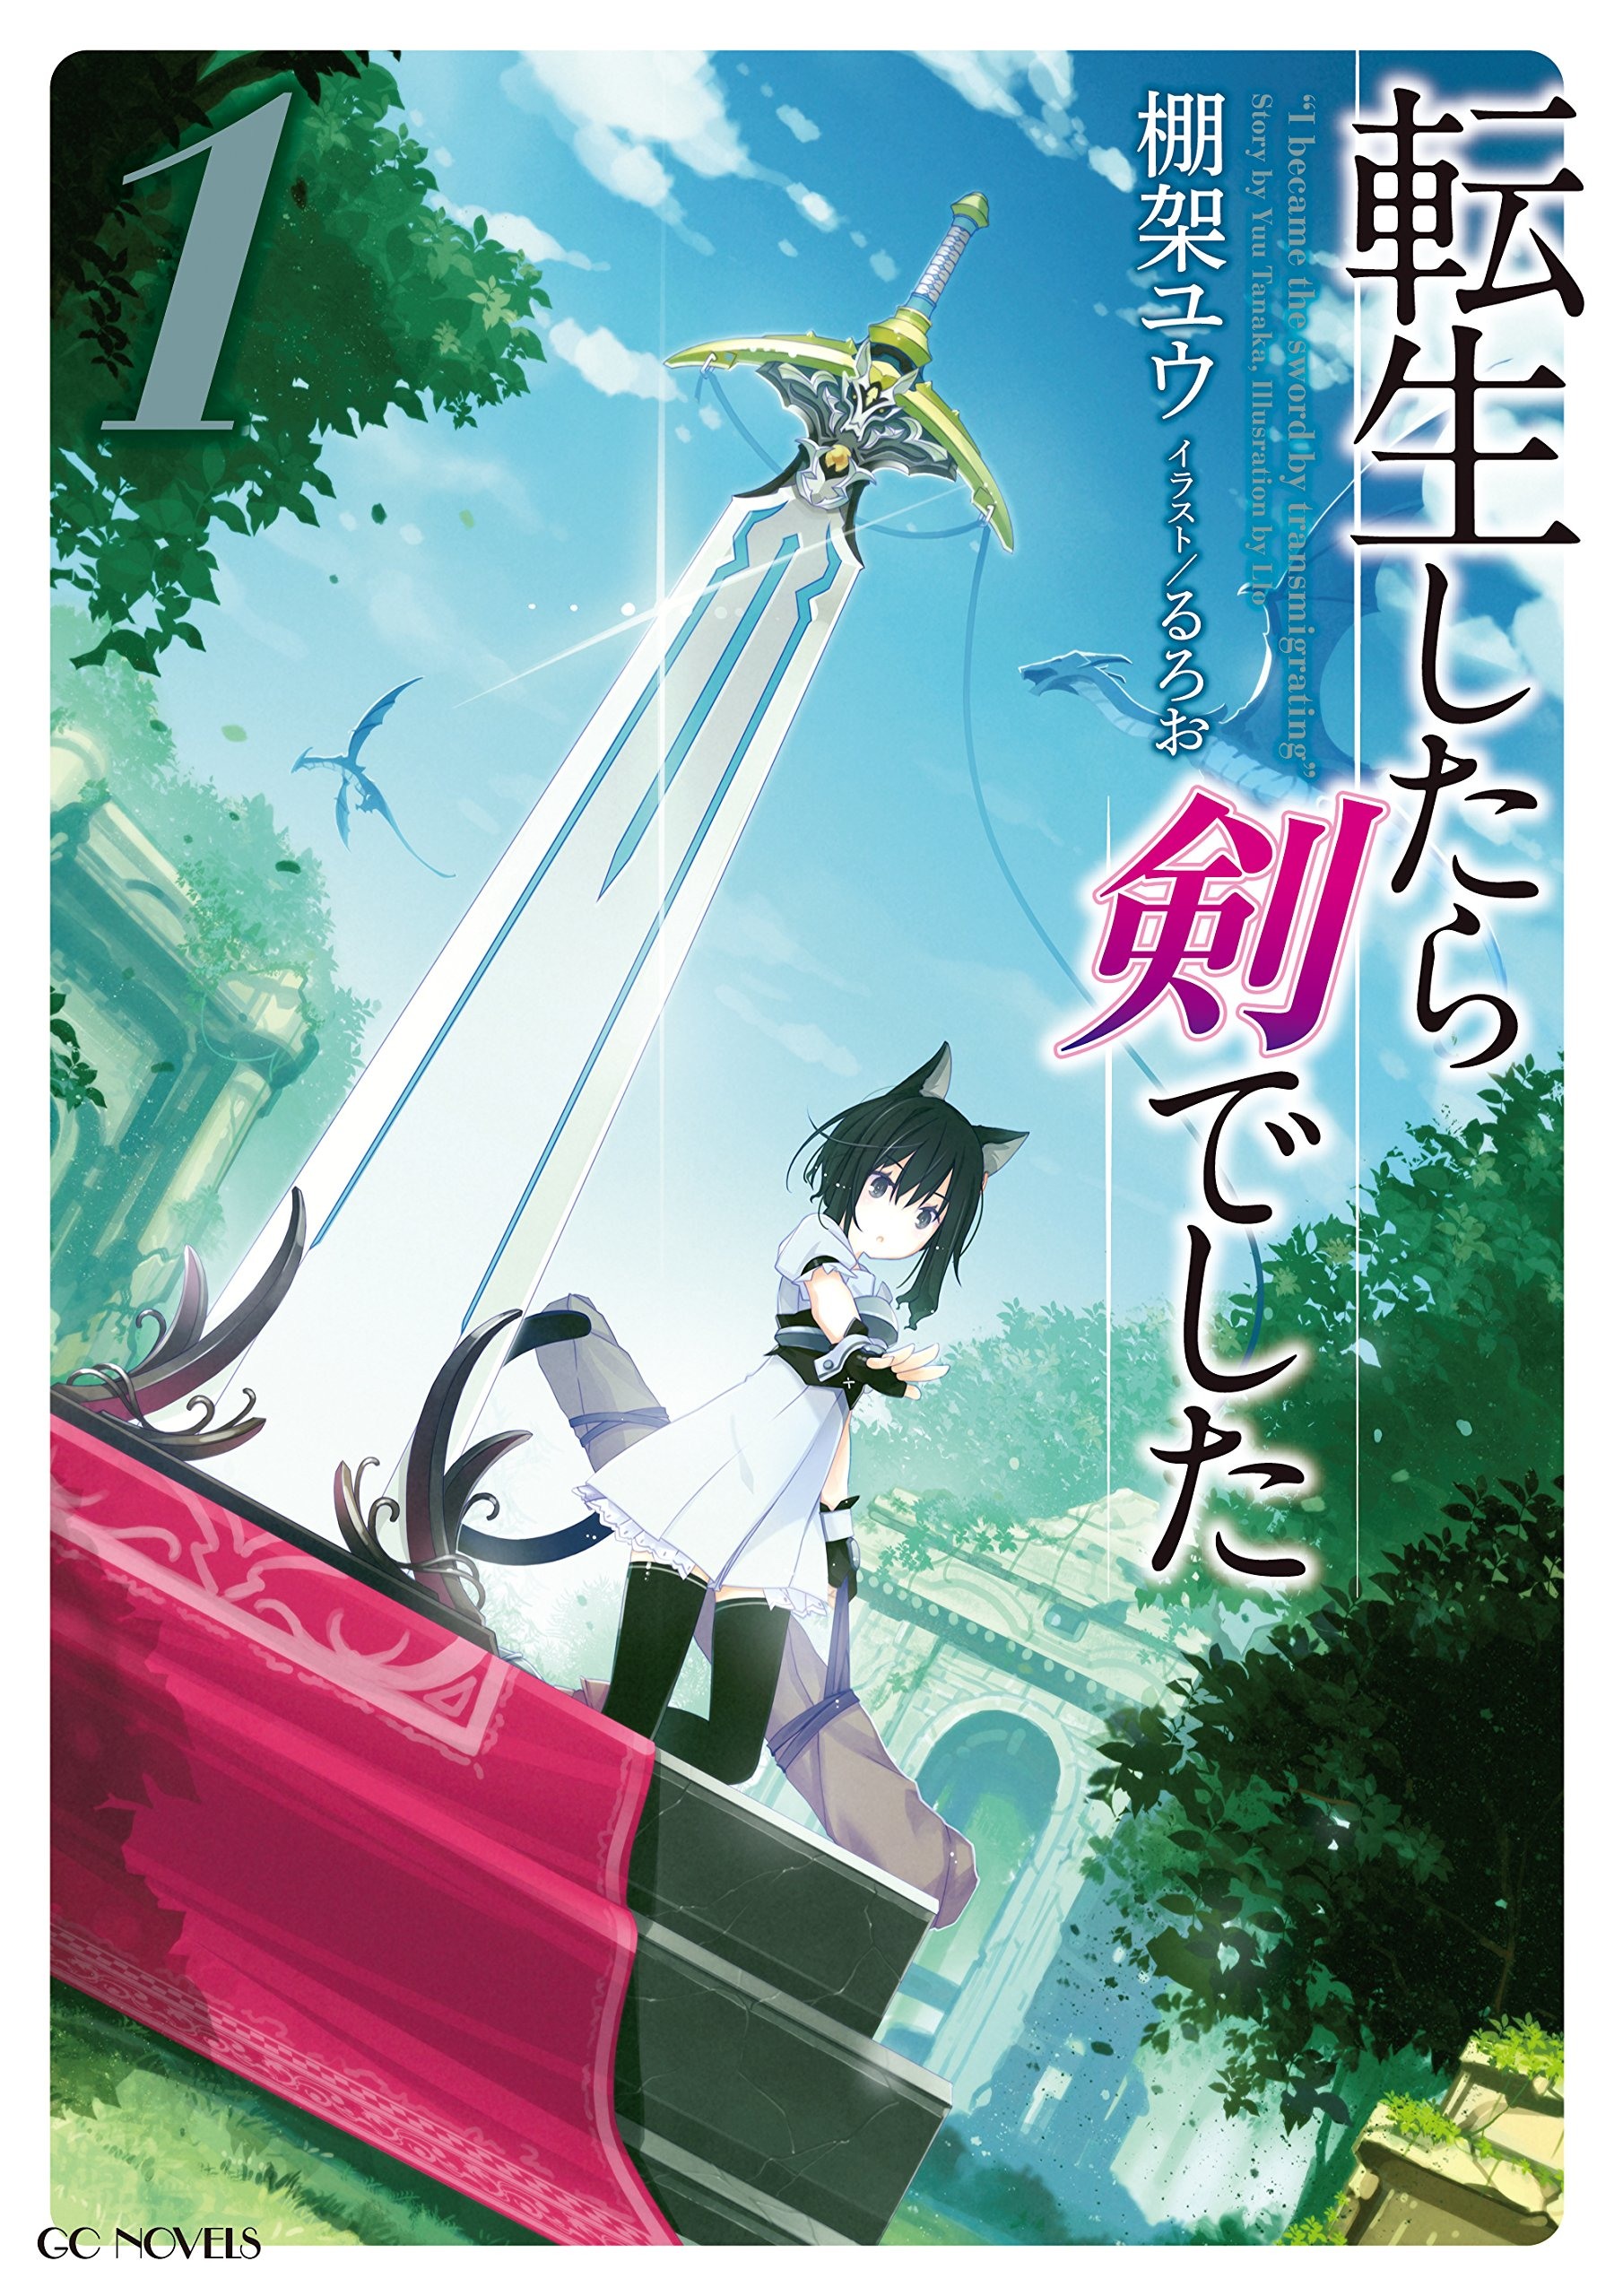 Reincarnated as a Sword (Tensei Shitara Ken Deshita) 16 – Japanese Book  Store